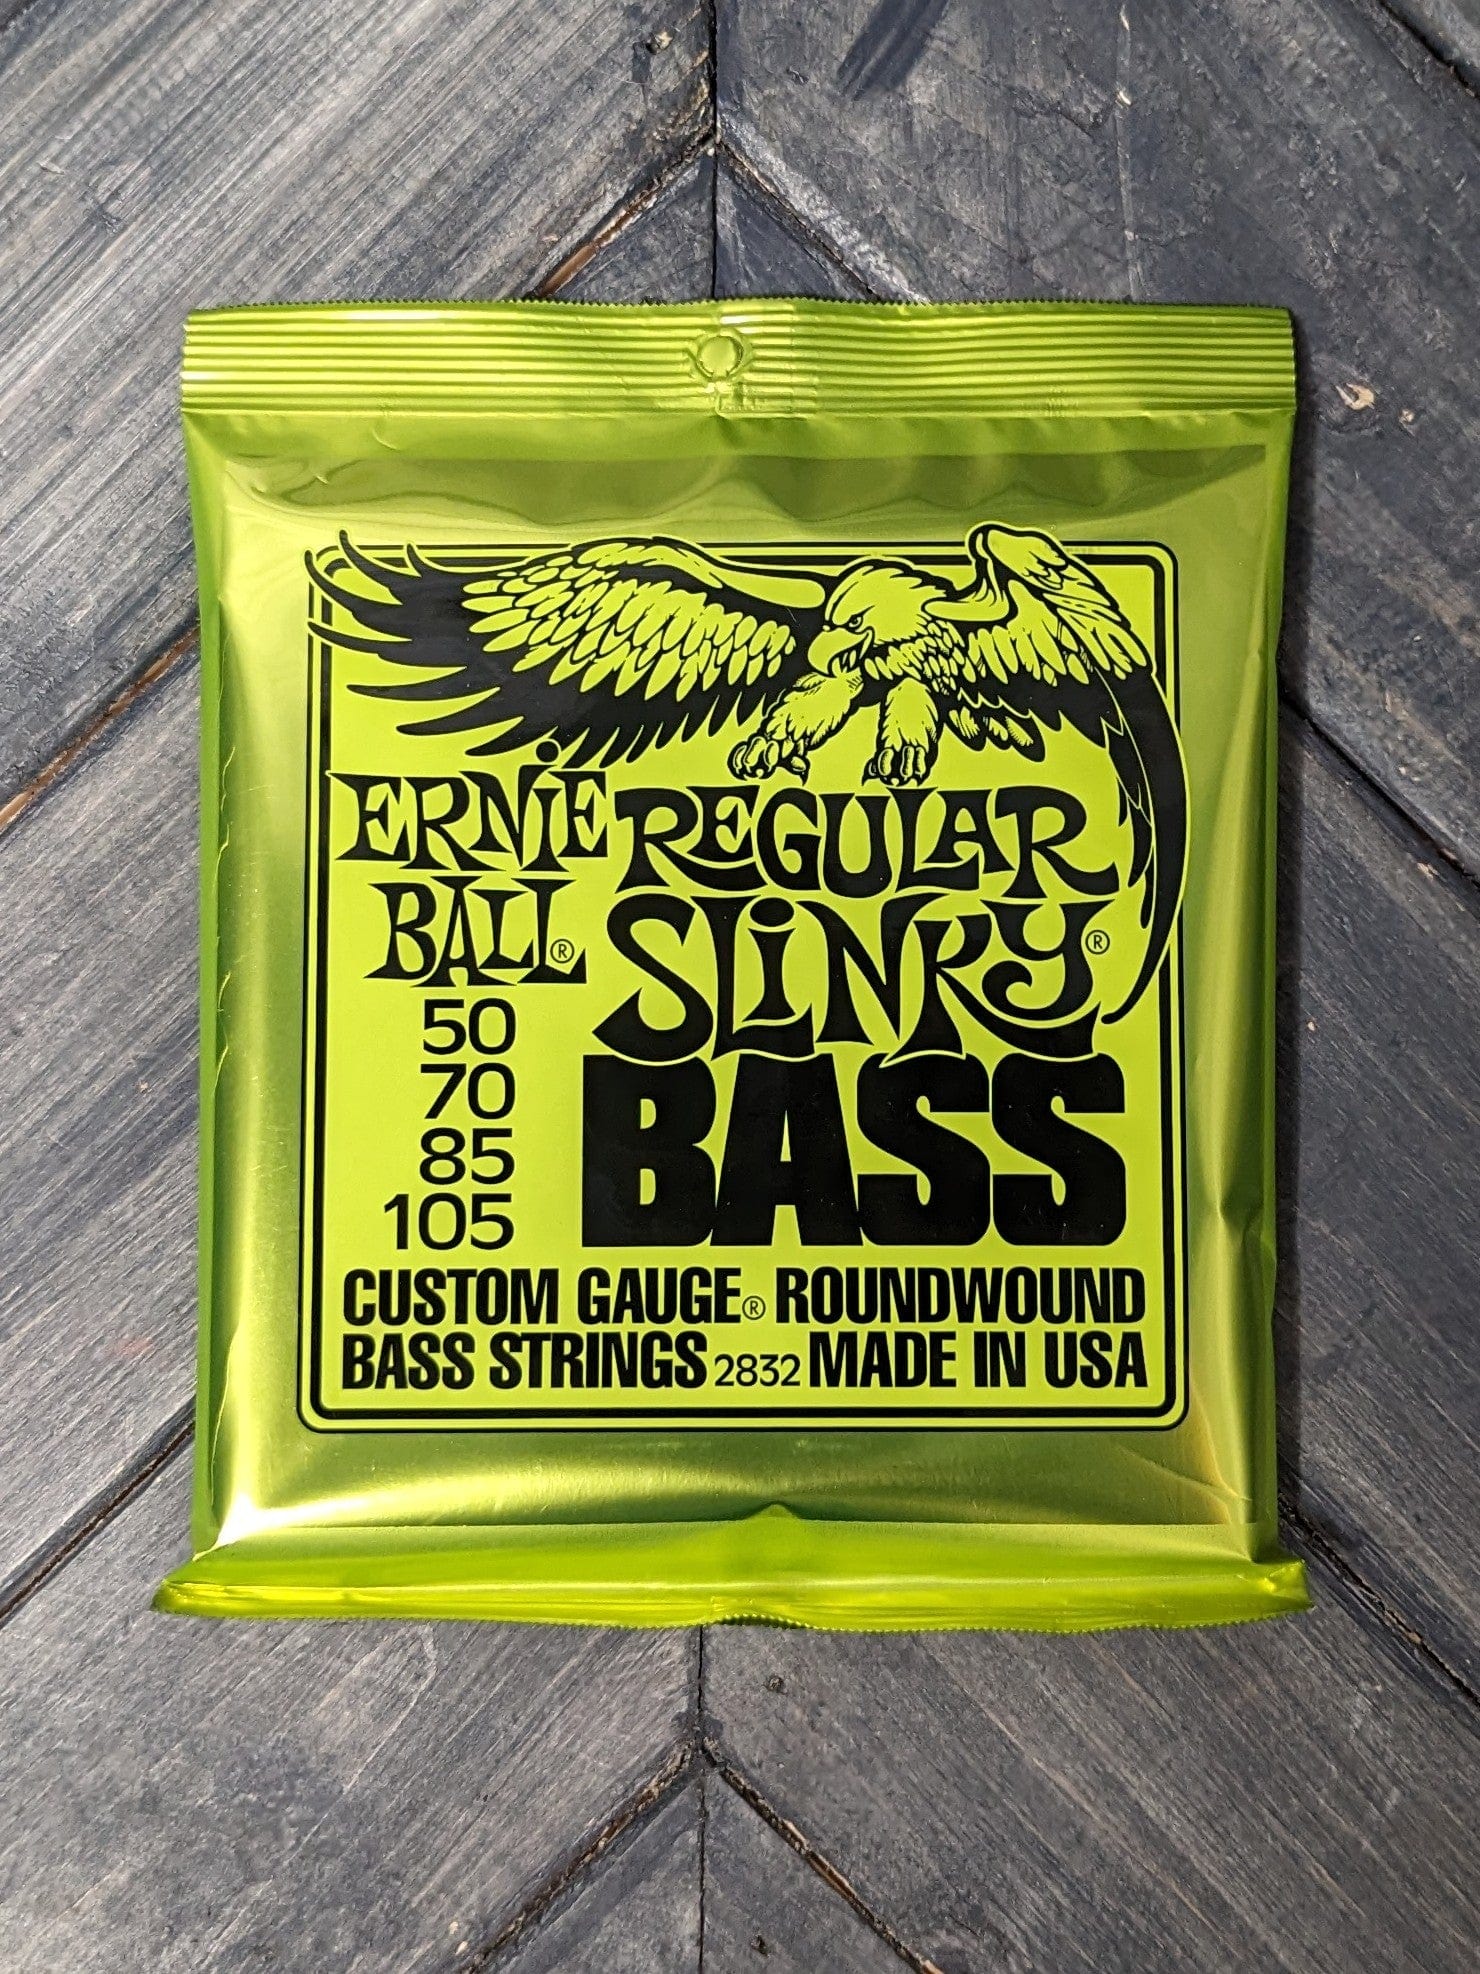 Ernie Ball Regular Slinky front of the packaging